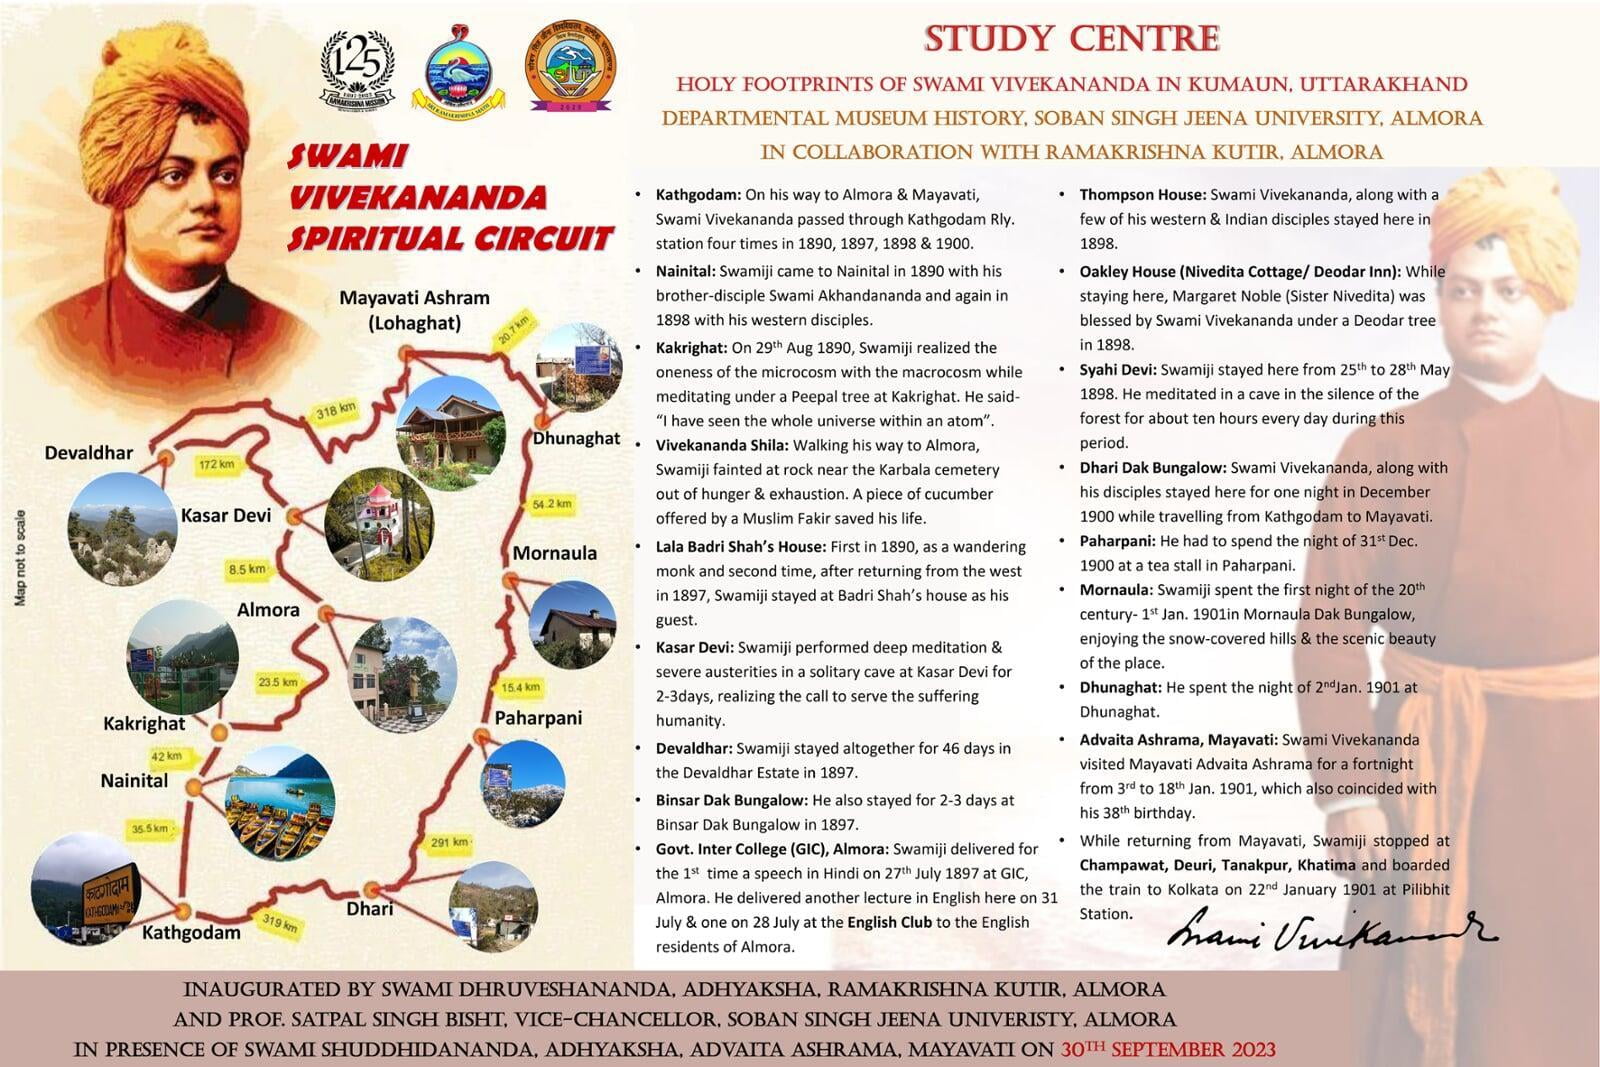 Sw. Vivekananda Spiritual Circuit